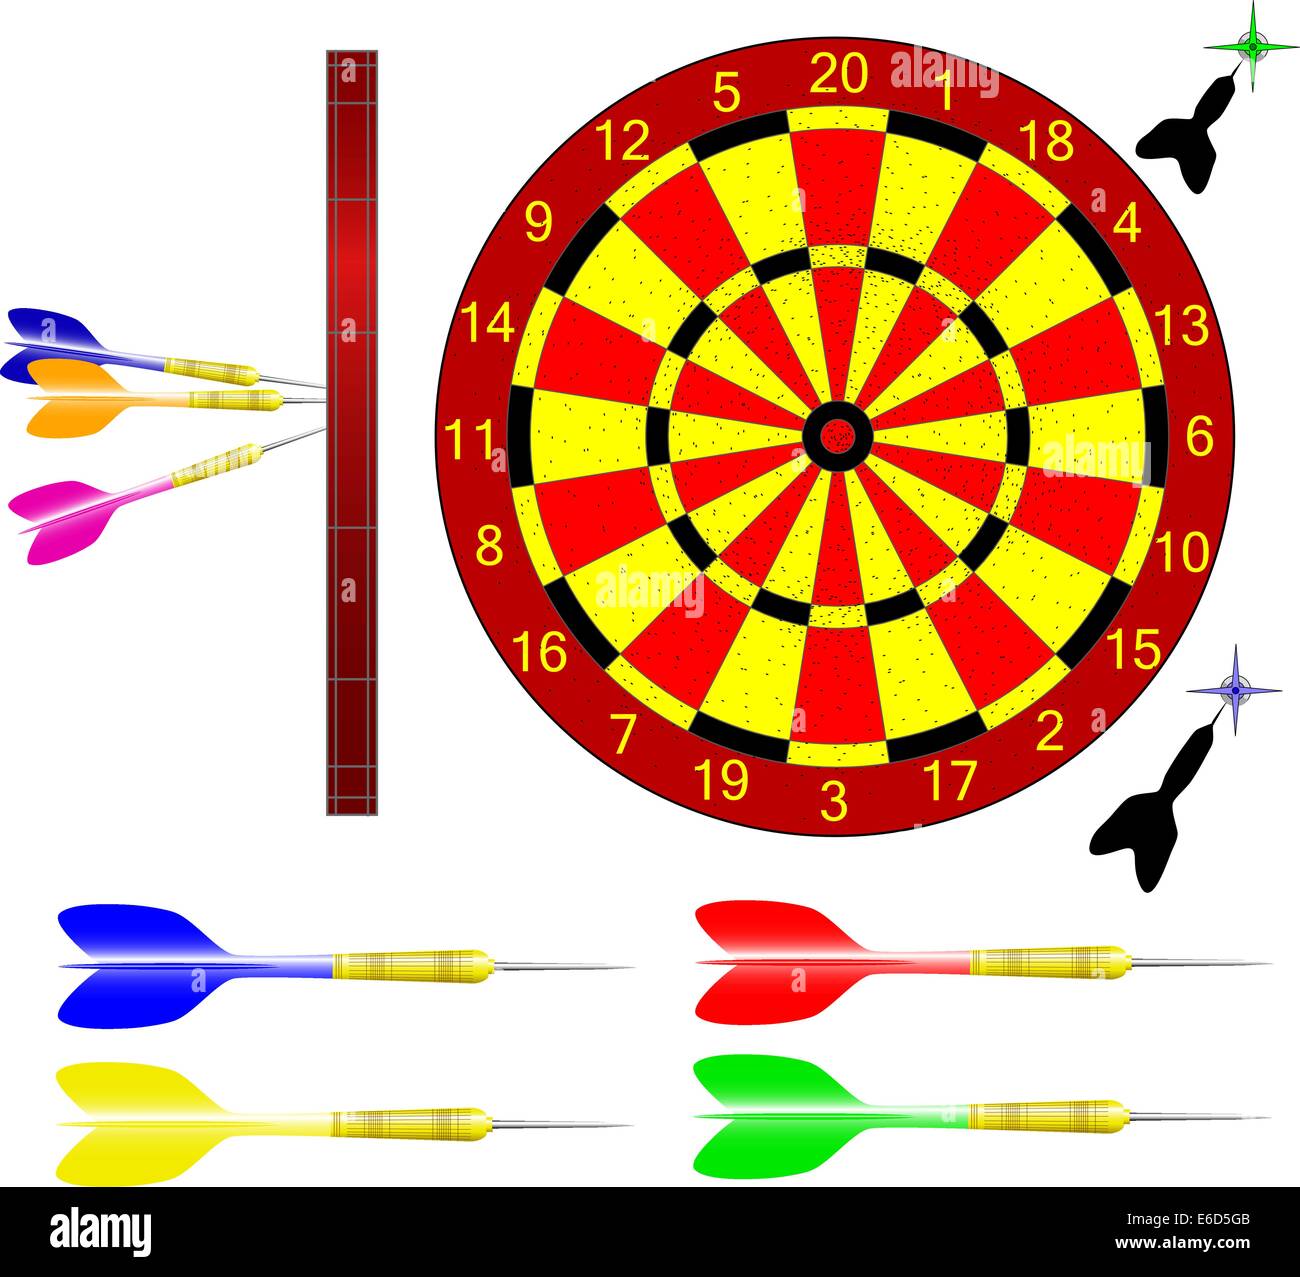 Vector illustration of darts and dartboard Stock Vector